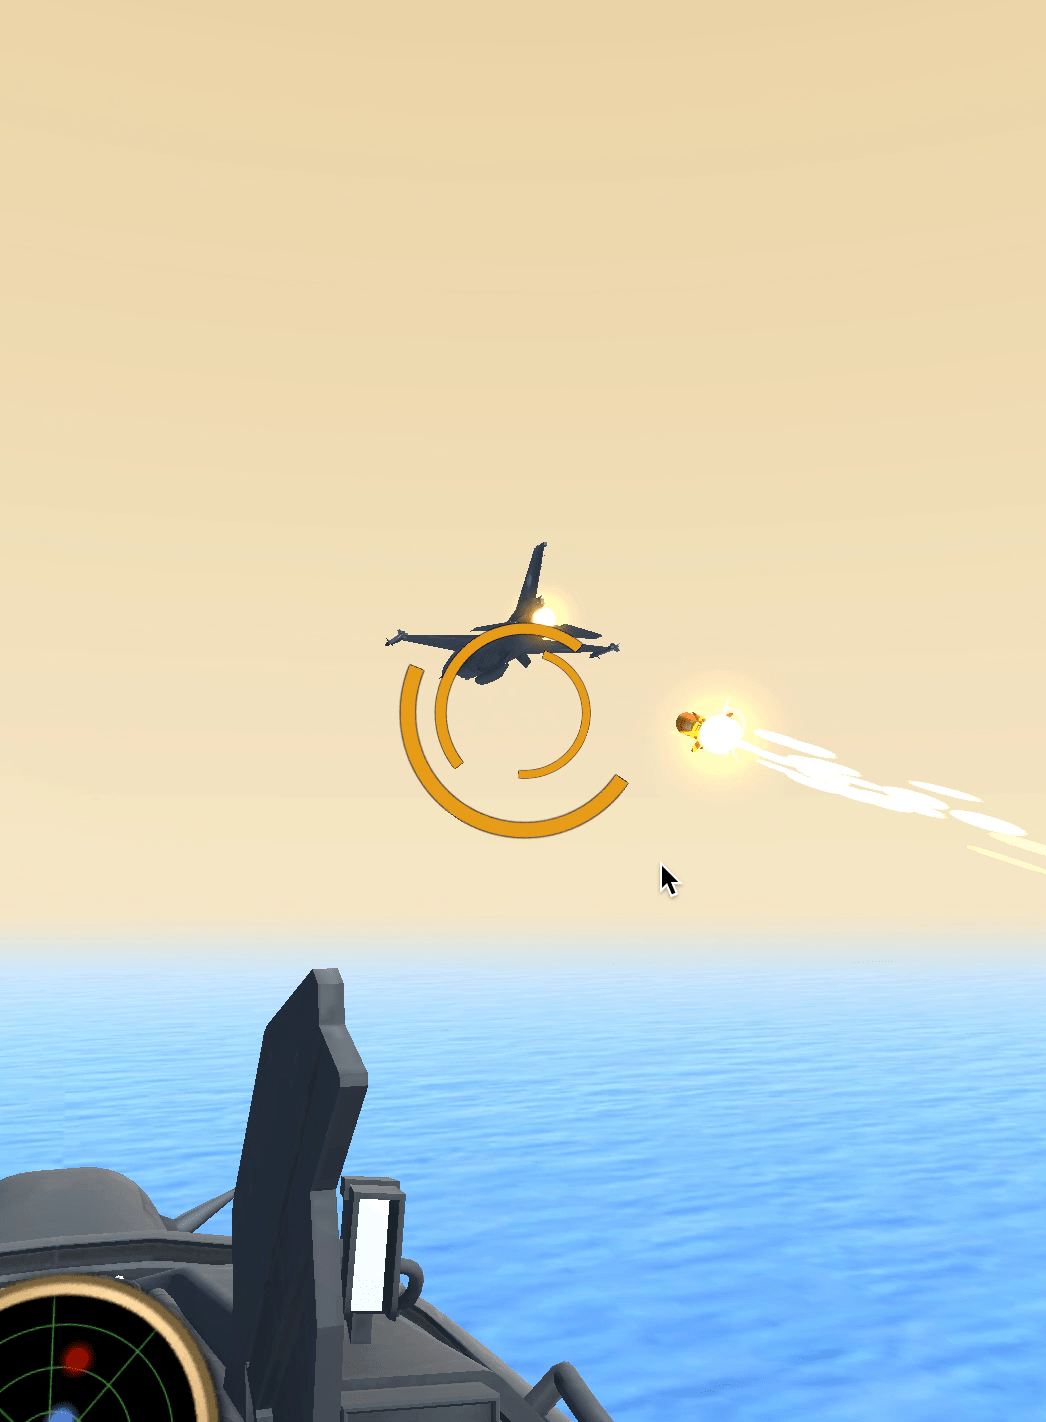 Air Strike - War Plane Simulator Screenshot 11